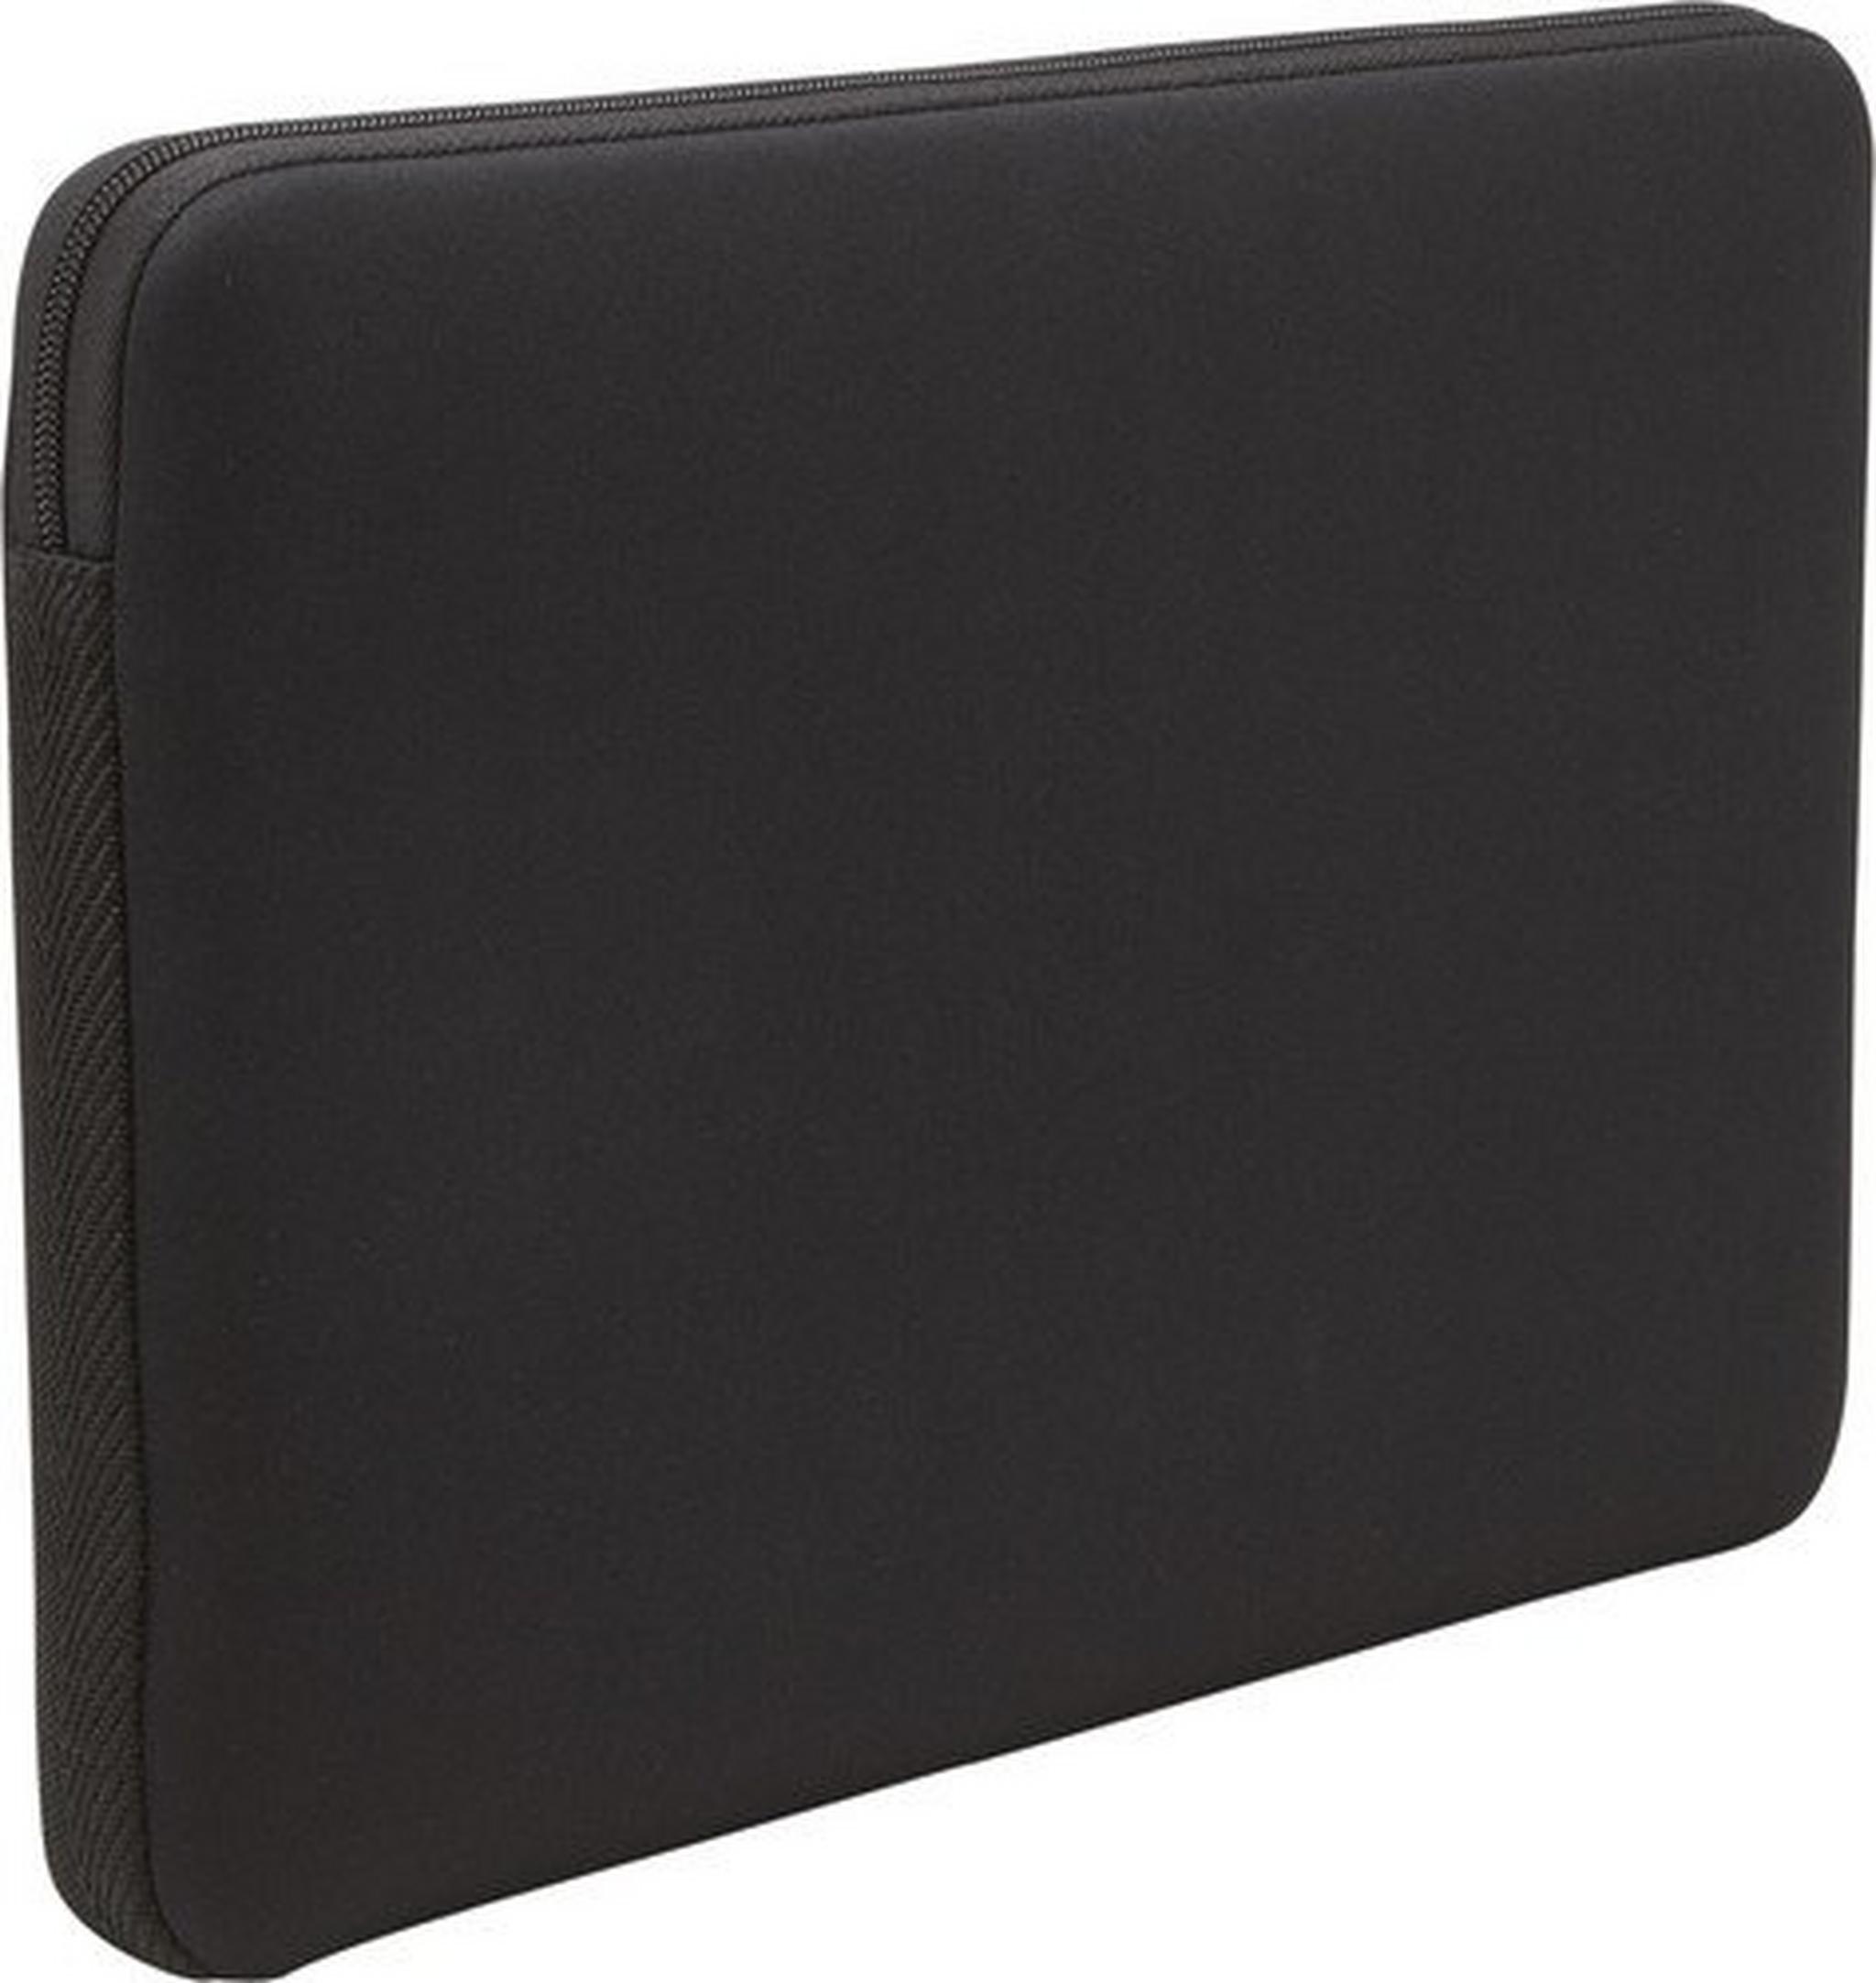 Case Logic Laptop Sleeve for MacBook Air/ MacBook Pro 13.3-inch (LAPS113K) - Black